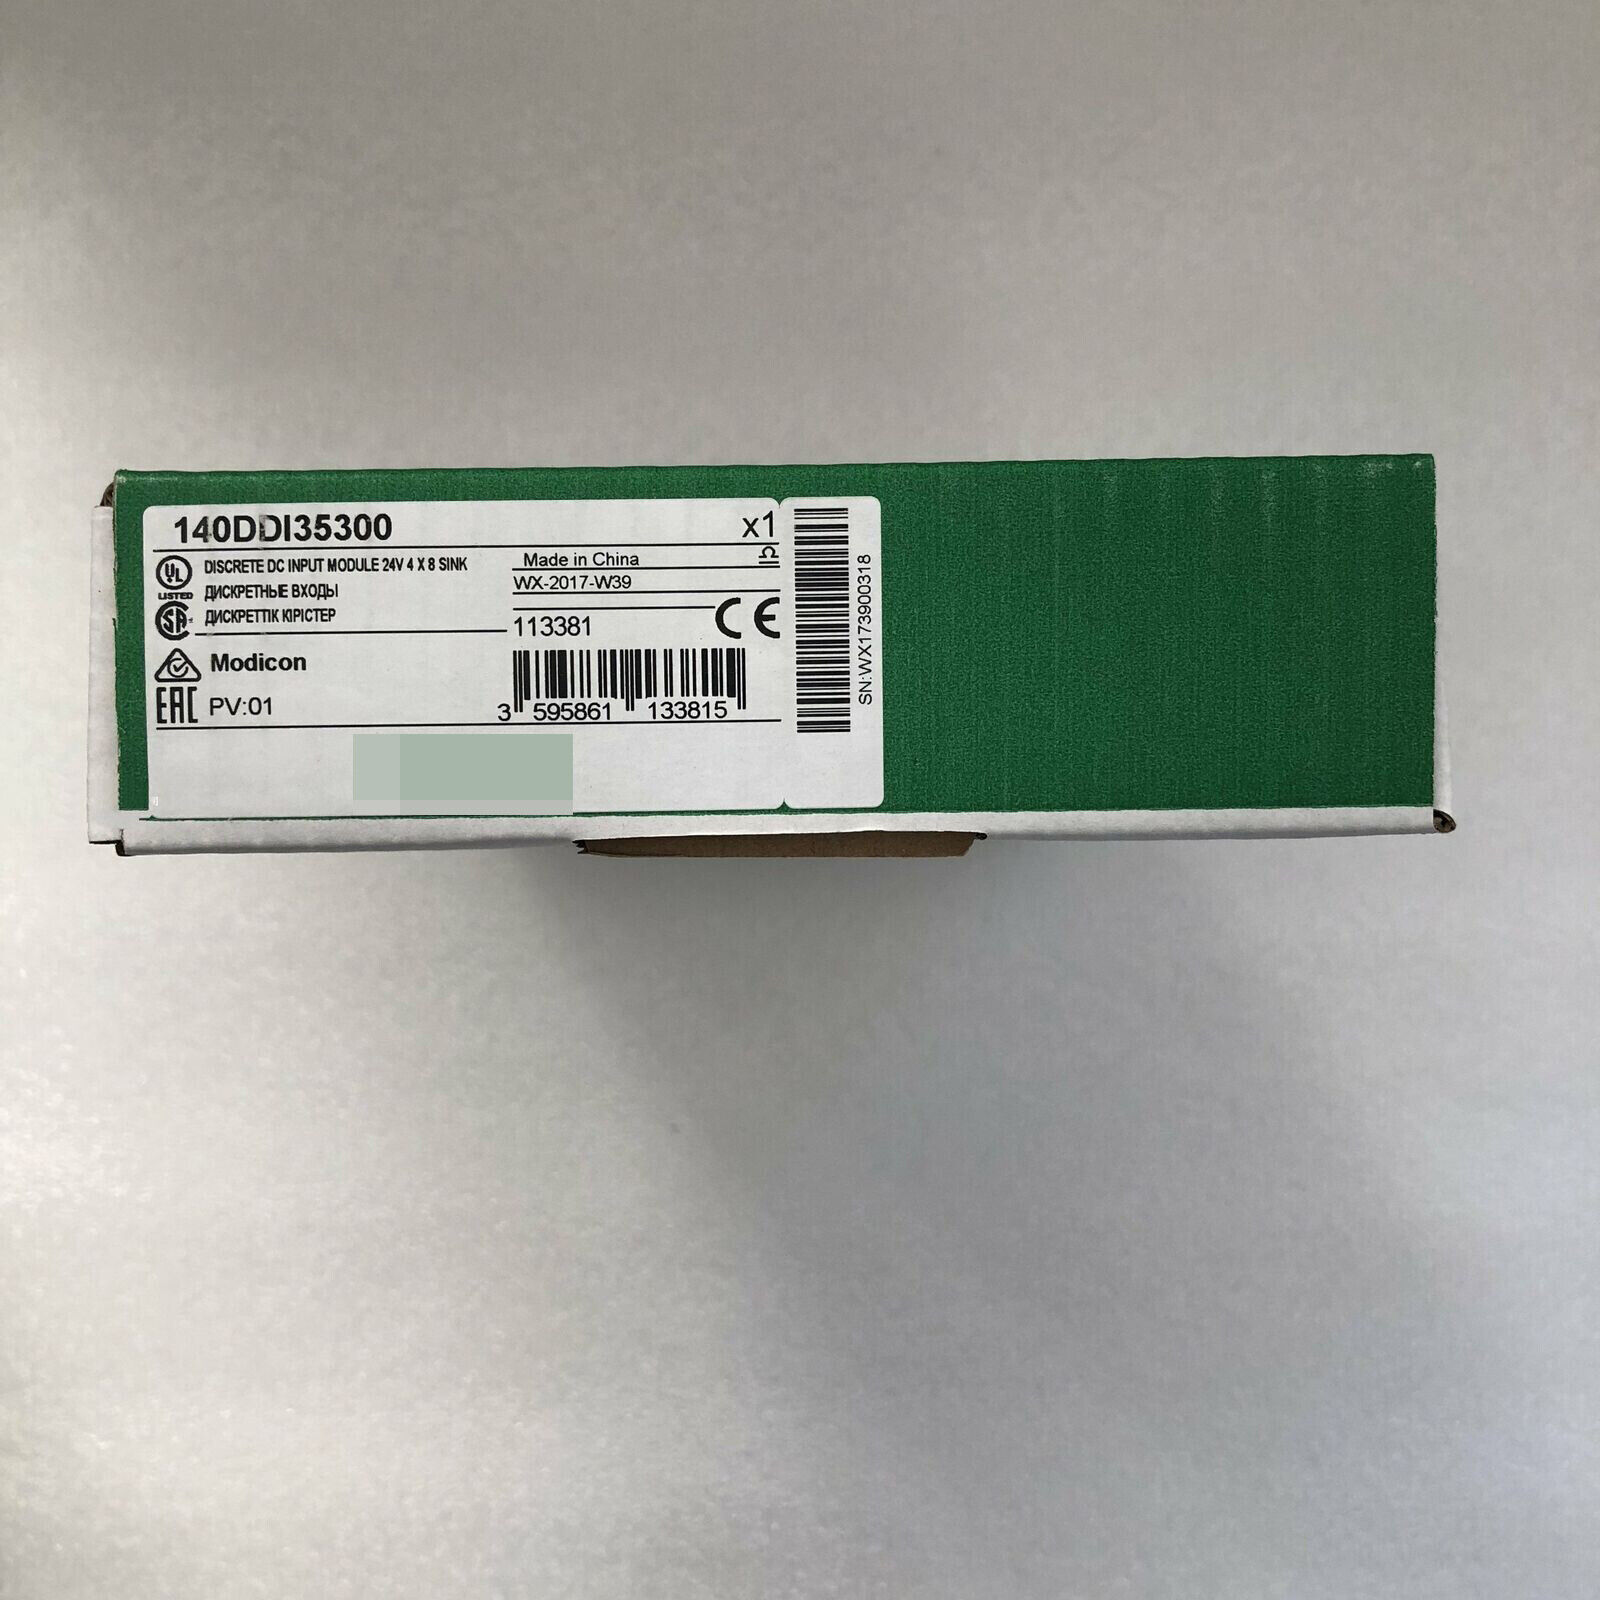 1PC New Schneider 140DDI35300 PLC Module In Box Expedited Shipping